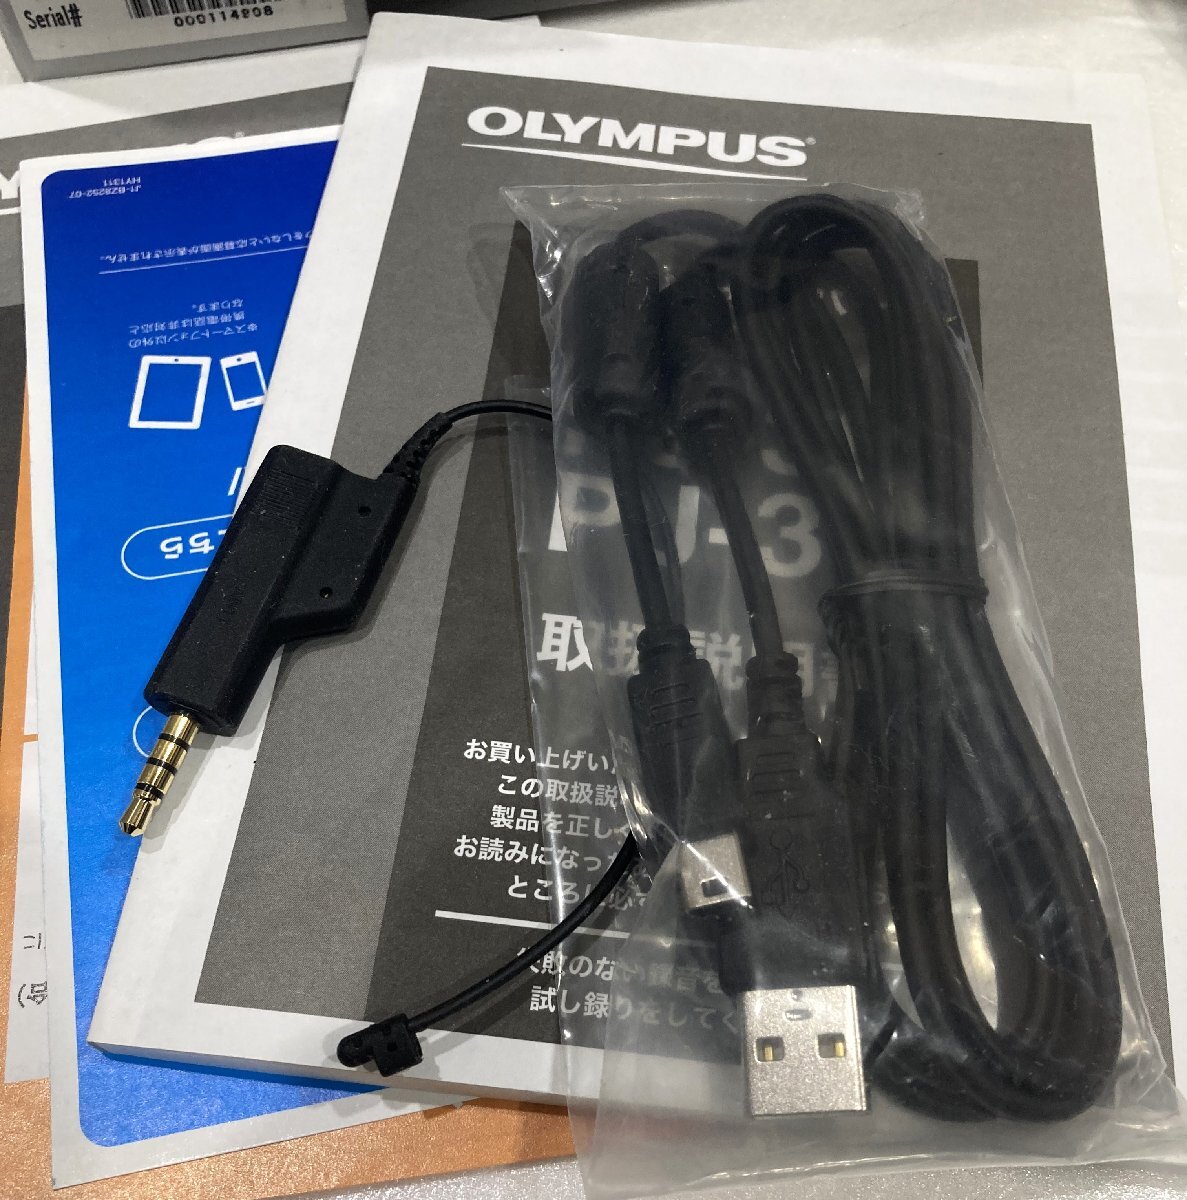 [76]1 jpy ~ OLYMPUS Olympus antenna station CR18 AC adaptor A613 radio server pocket PJ-30 for operation electrification not yet verification Junk 